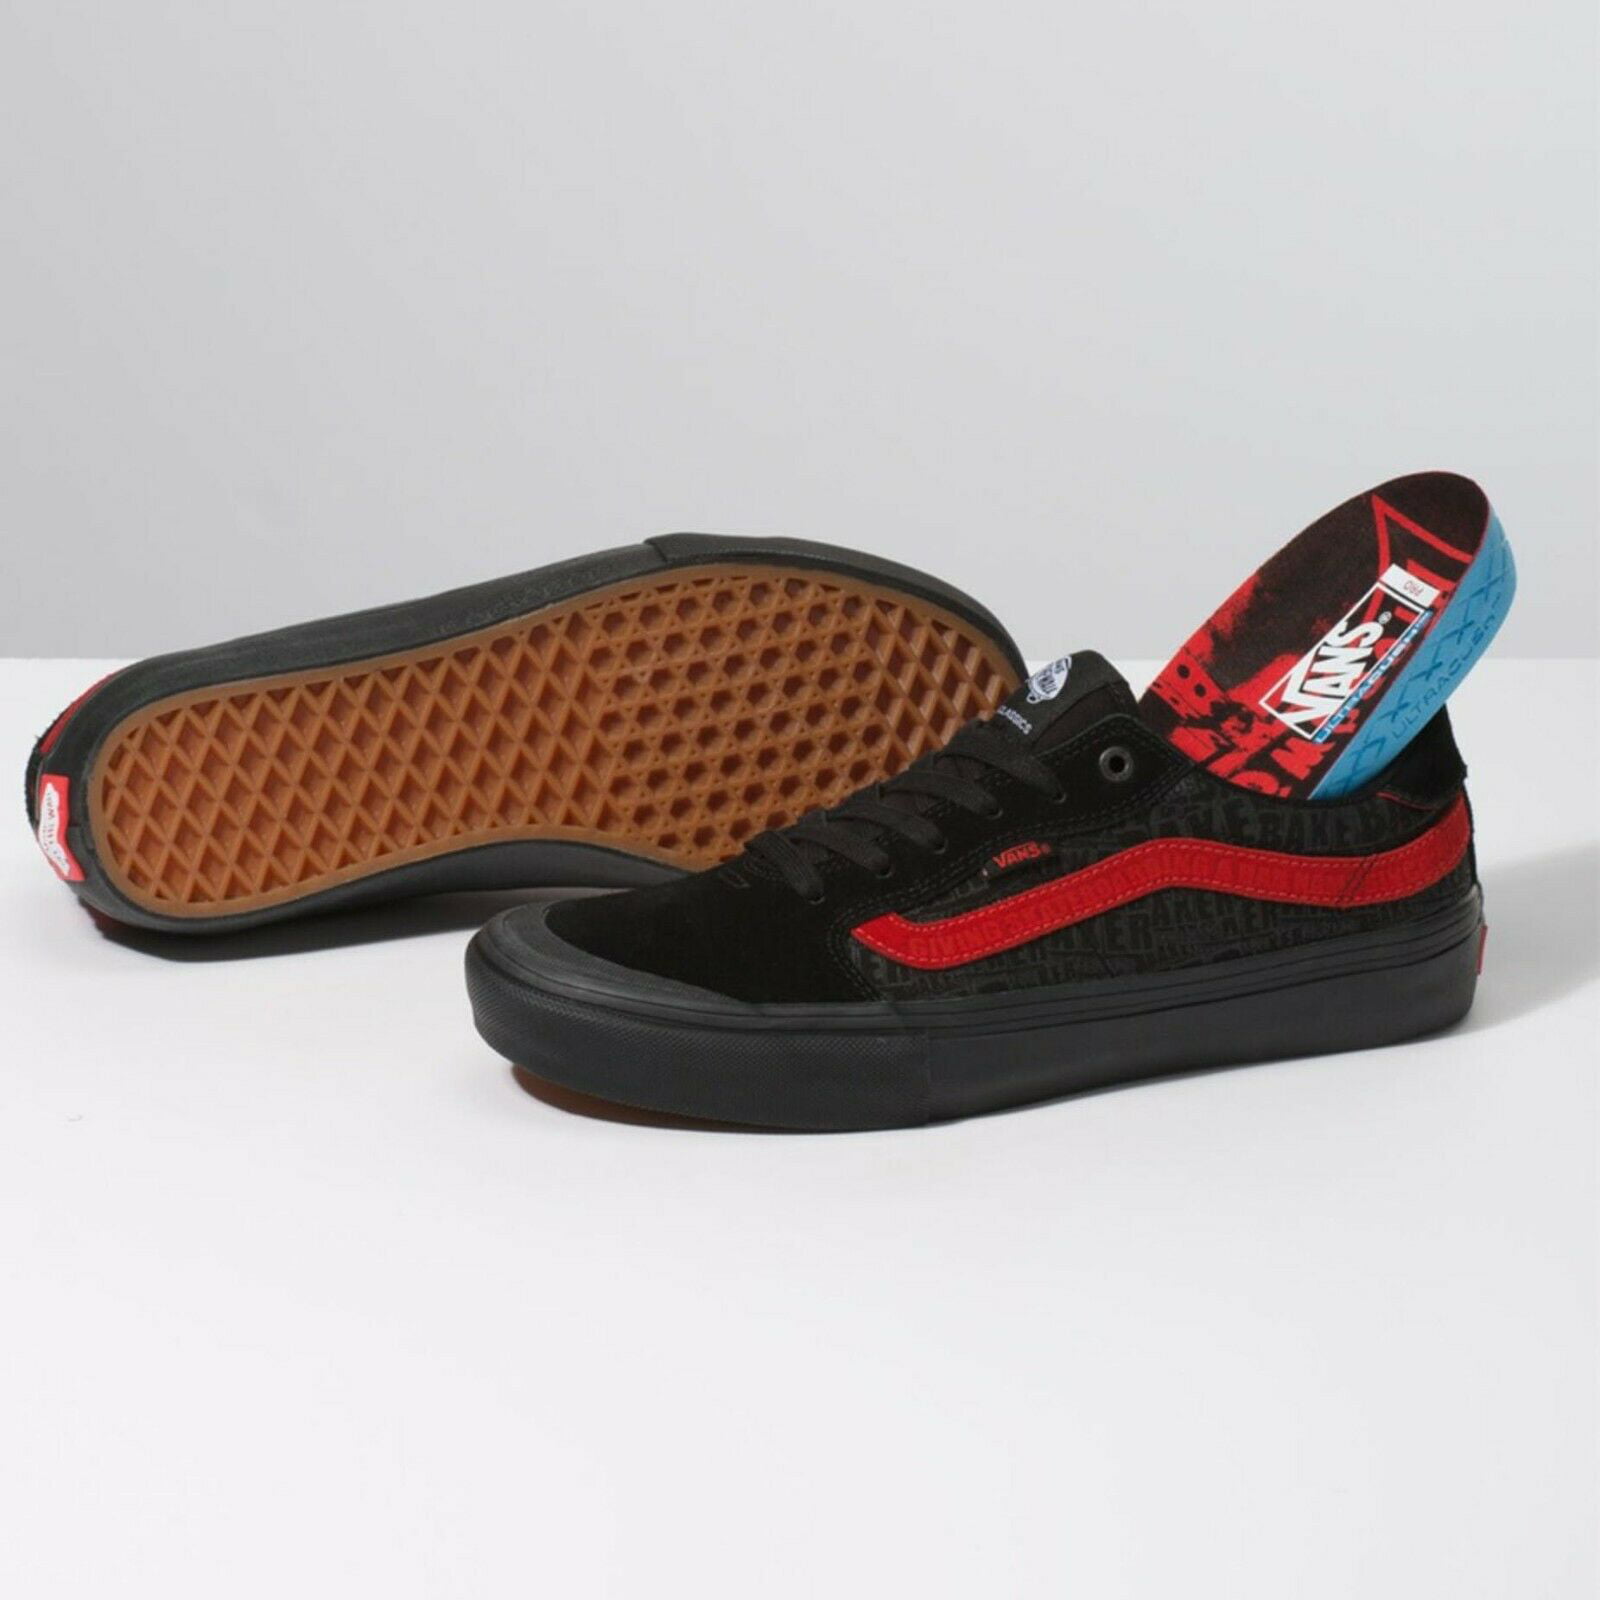 Haan Het pad Westers Vans Style 112 Pro Baker Black/Black/Red Men's Classic Skate Shoes Size 7.5  - Walmart.com